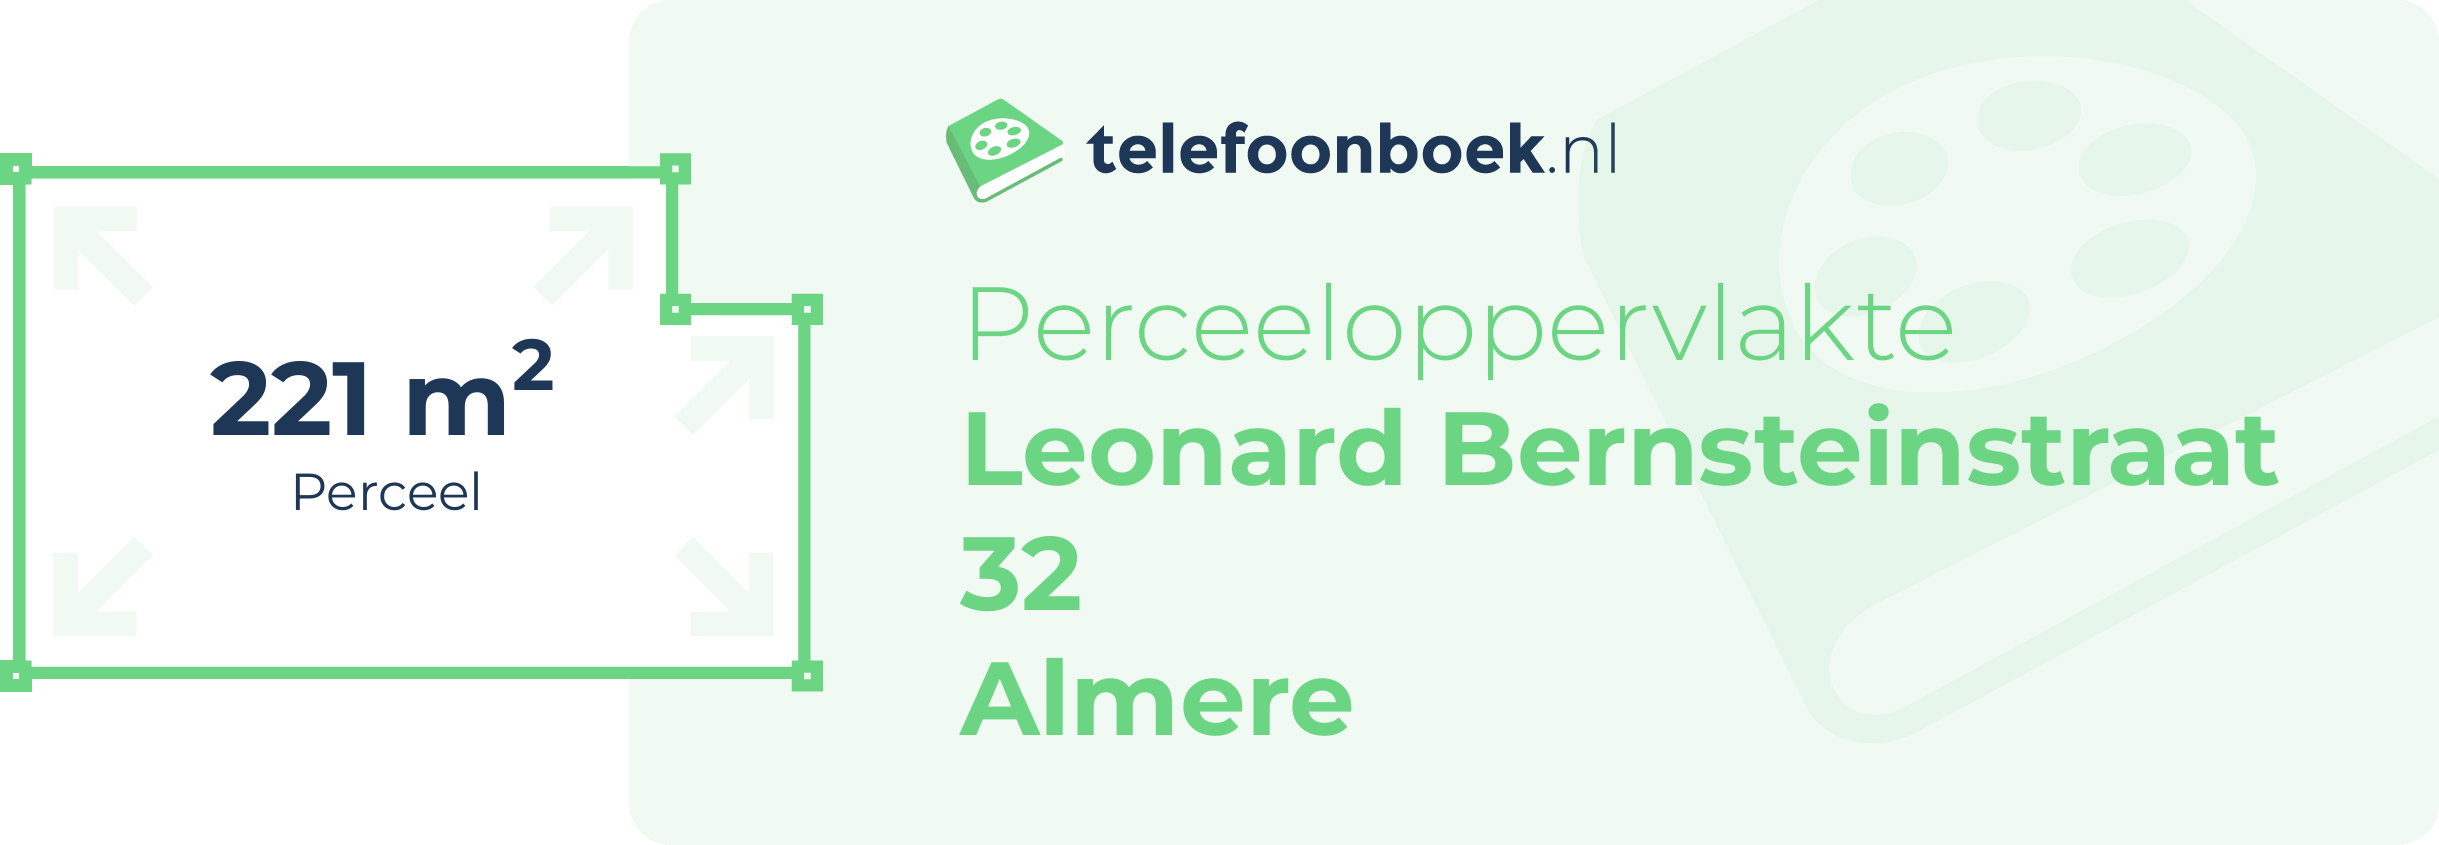 Perceeloppervlakte Leonard Bernsteinstraat 32 Almere